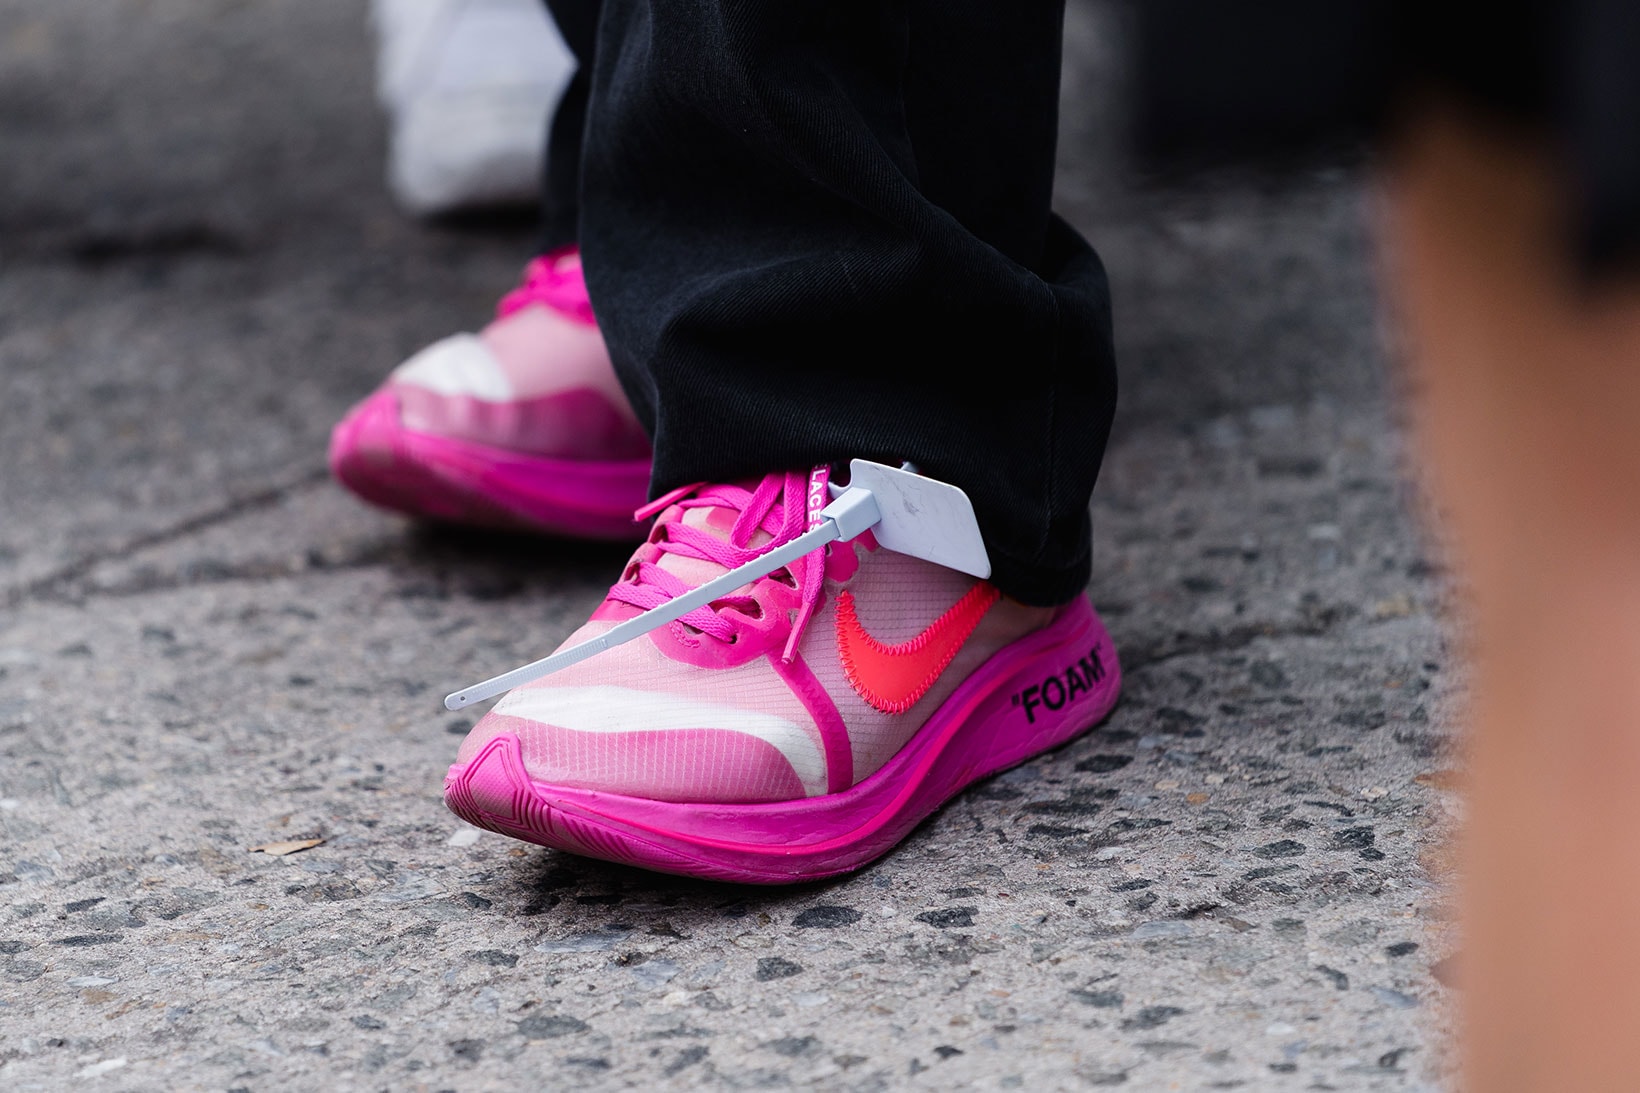 Best Street Sneakers at New York Fashion Week